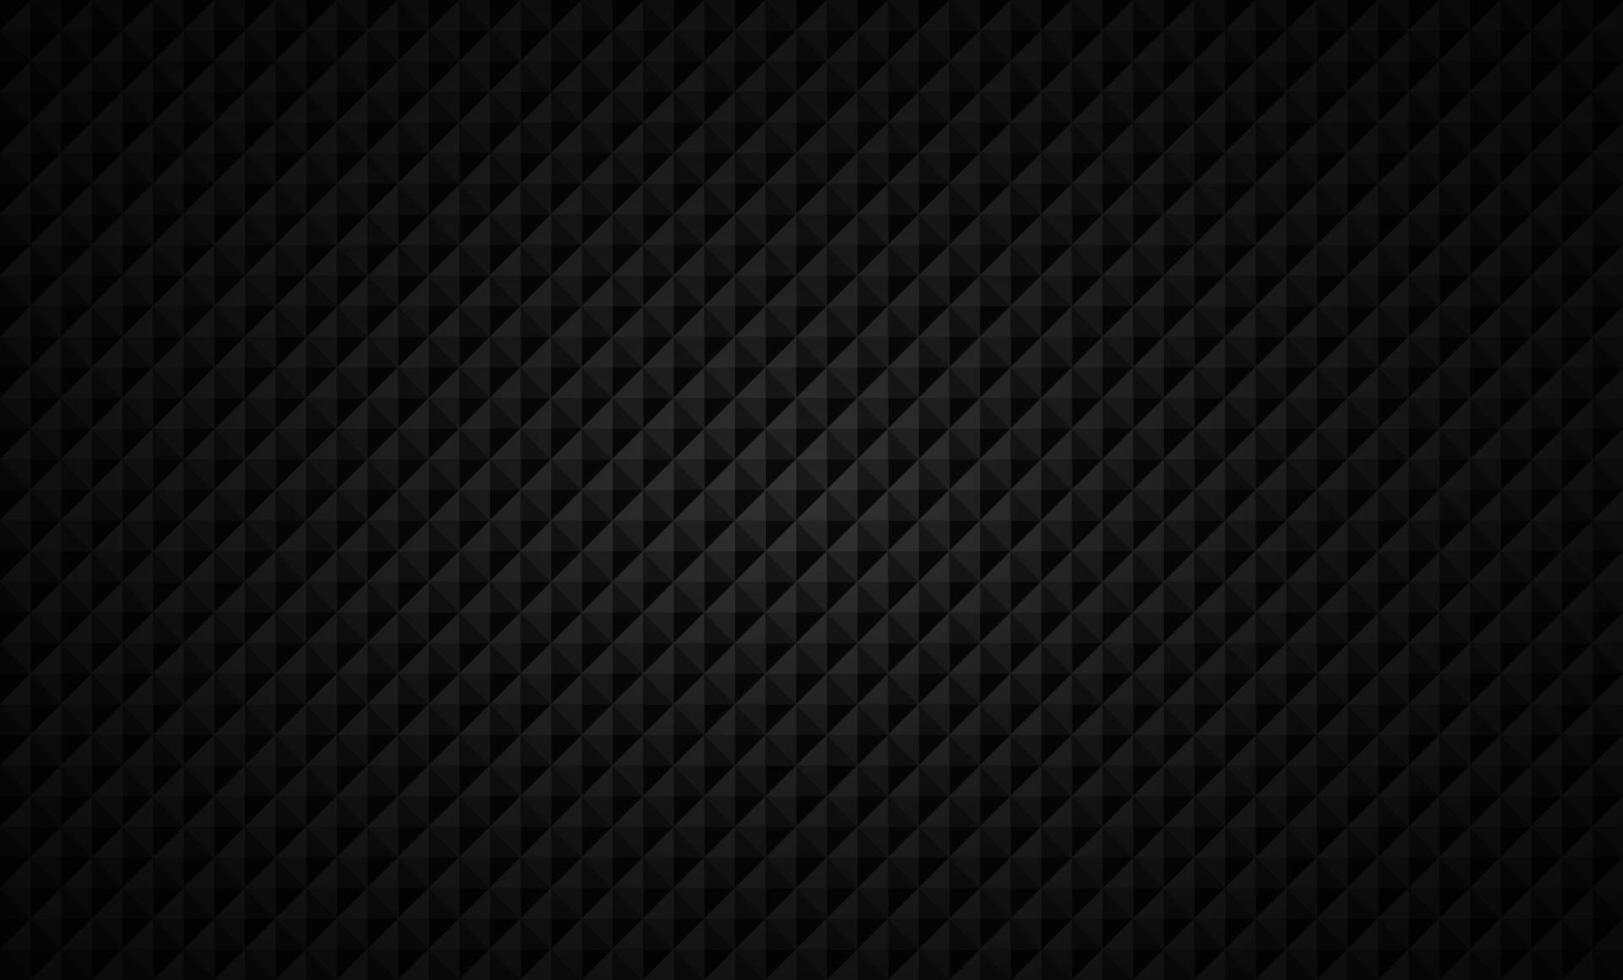 vinkel former textur svart bakgrund. vektor illustration